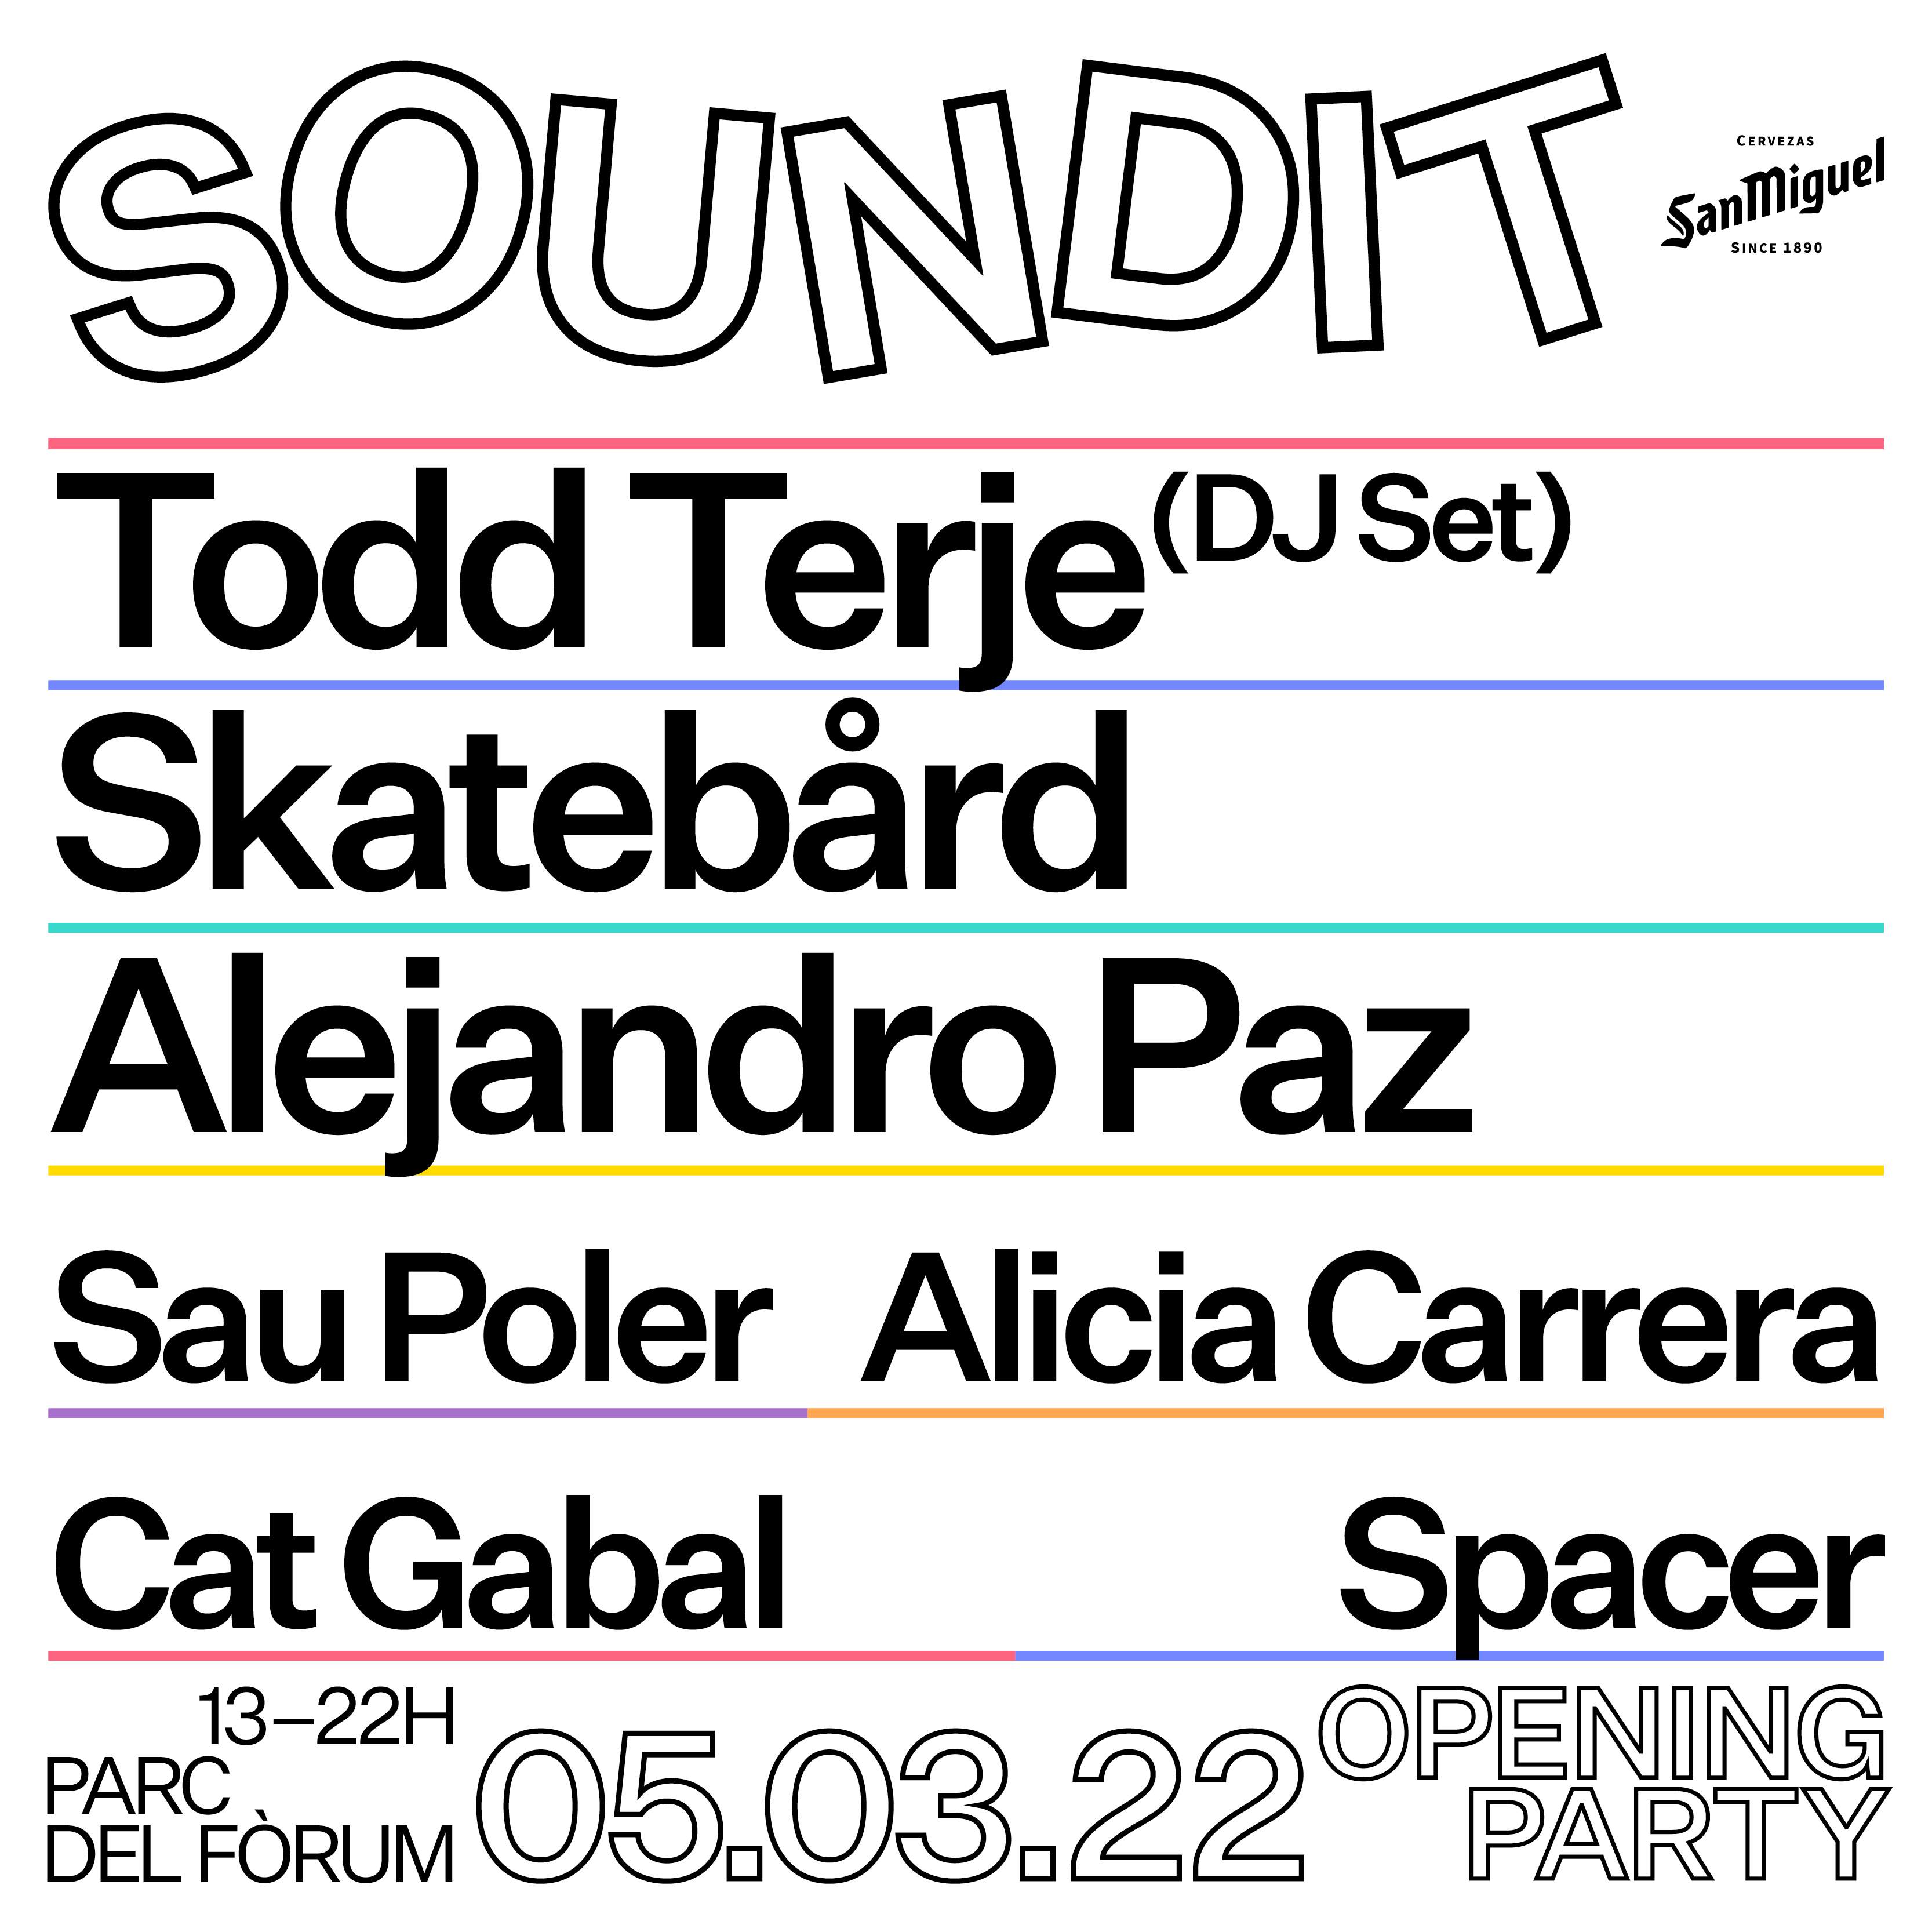 SOUNDIT Opening Party: Todd Terje (DJ set), Skatebård, Alejandro Paz, SPACER - フライヤー表